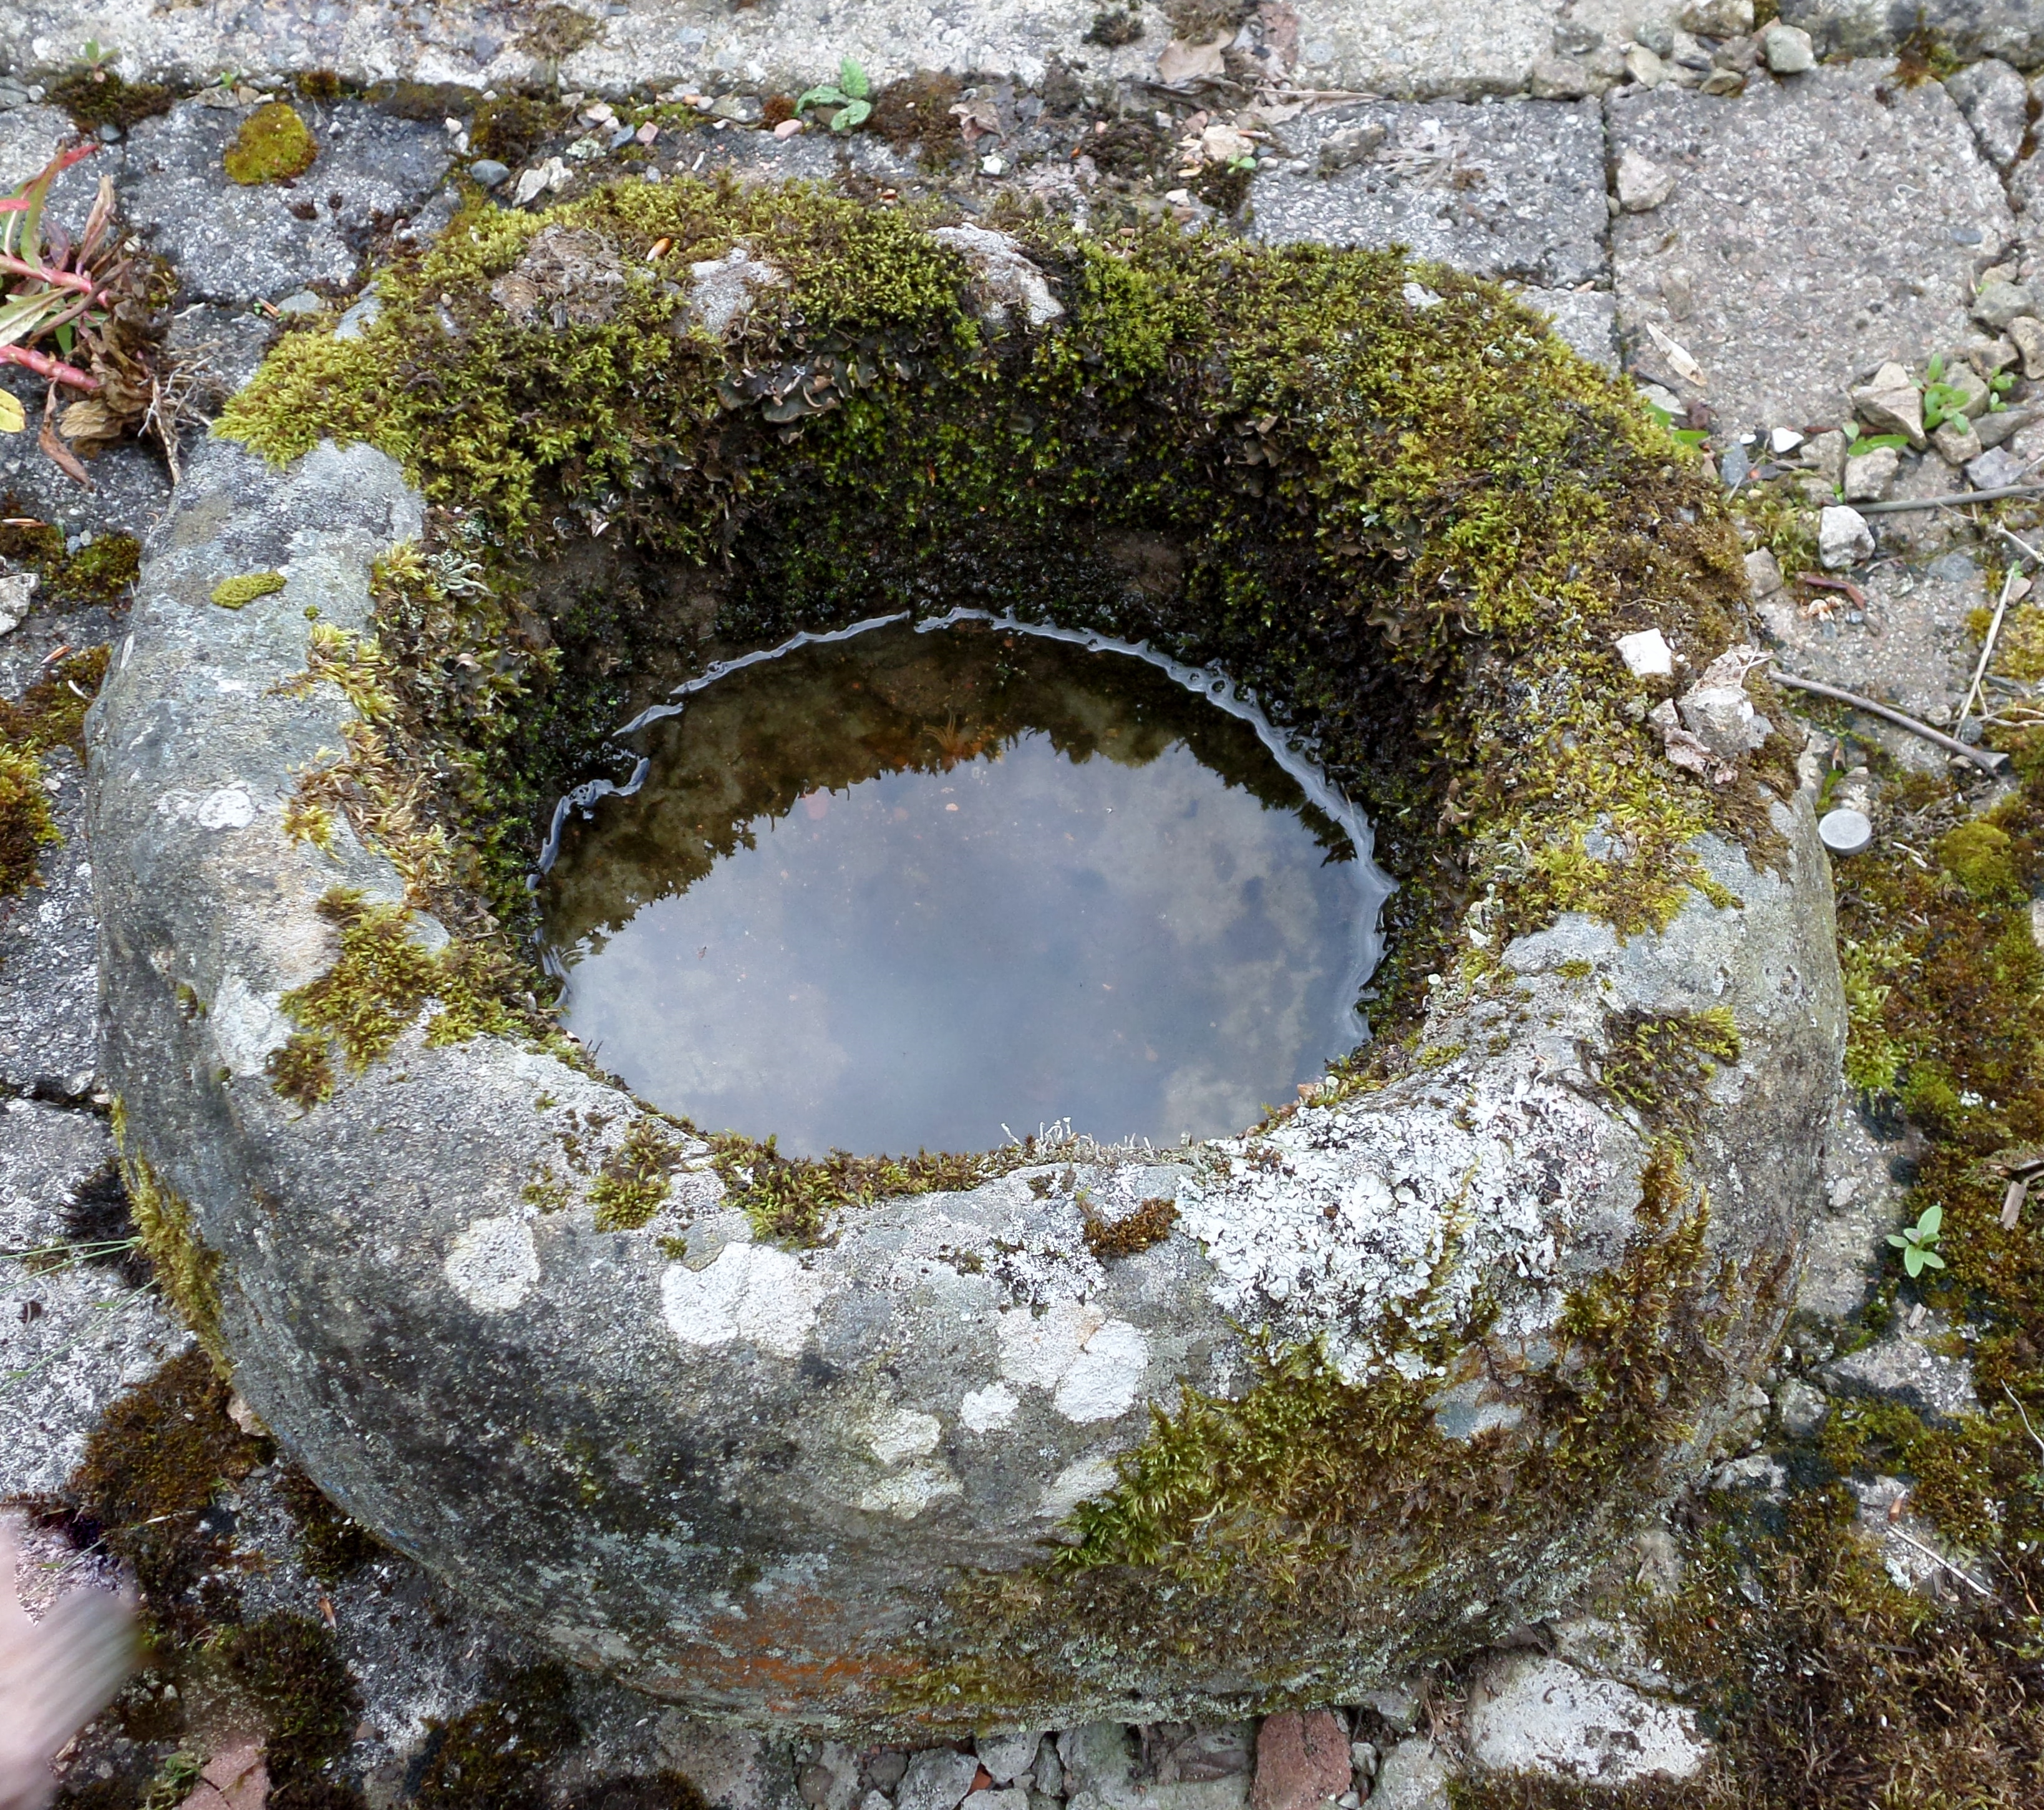 File:Chiseled stone.jpg - Wikimedia Commons